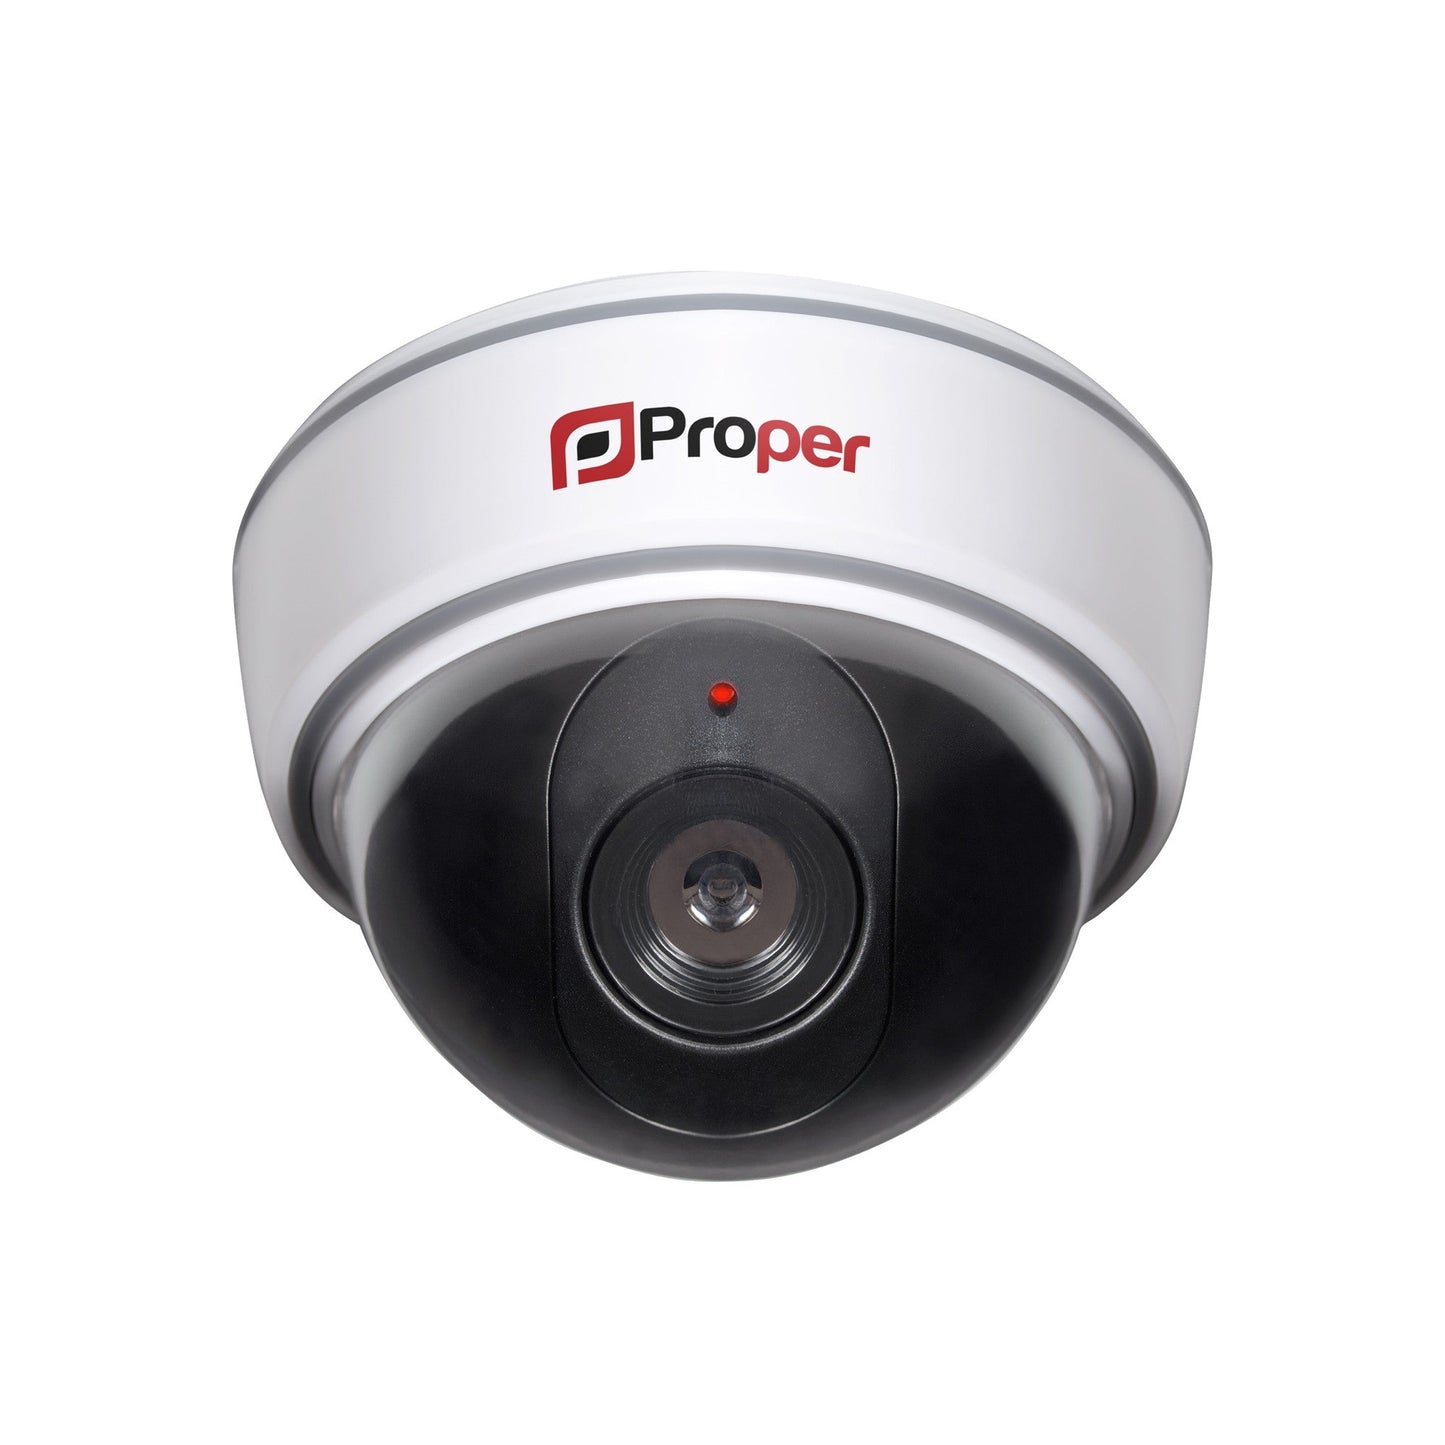 ProperAV Replica Speed Dome Security Camera with LED Flashing Light - Black & White - maplin.co.uk